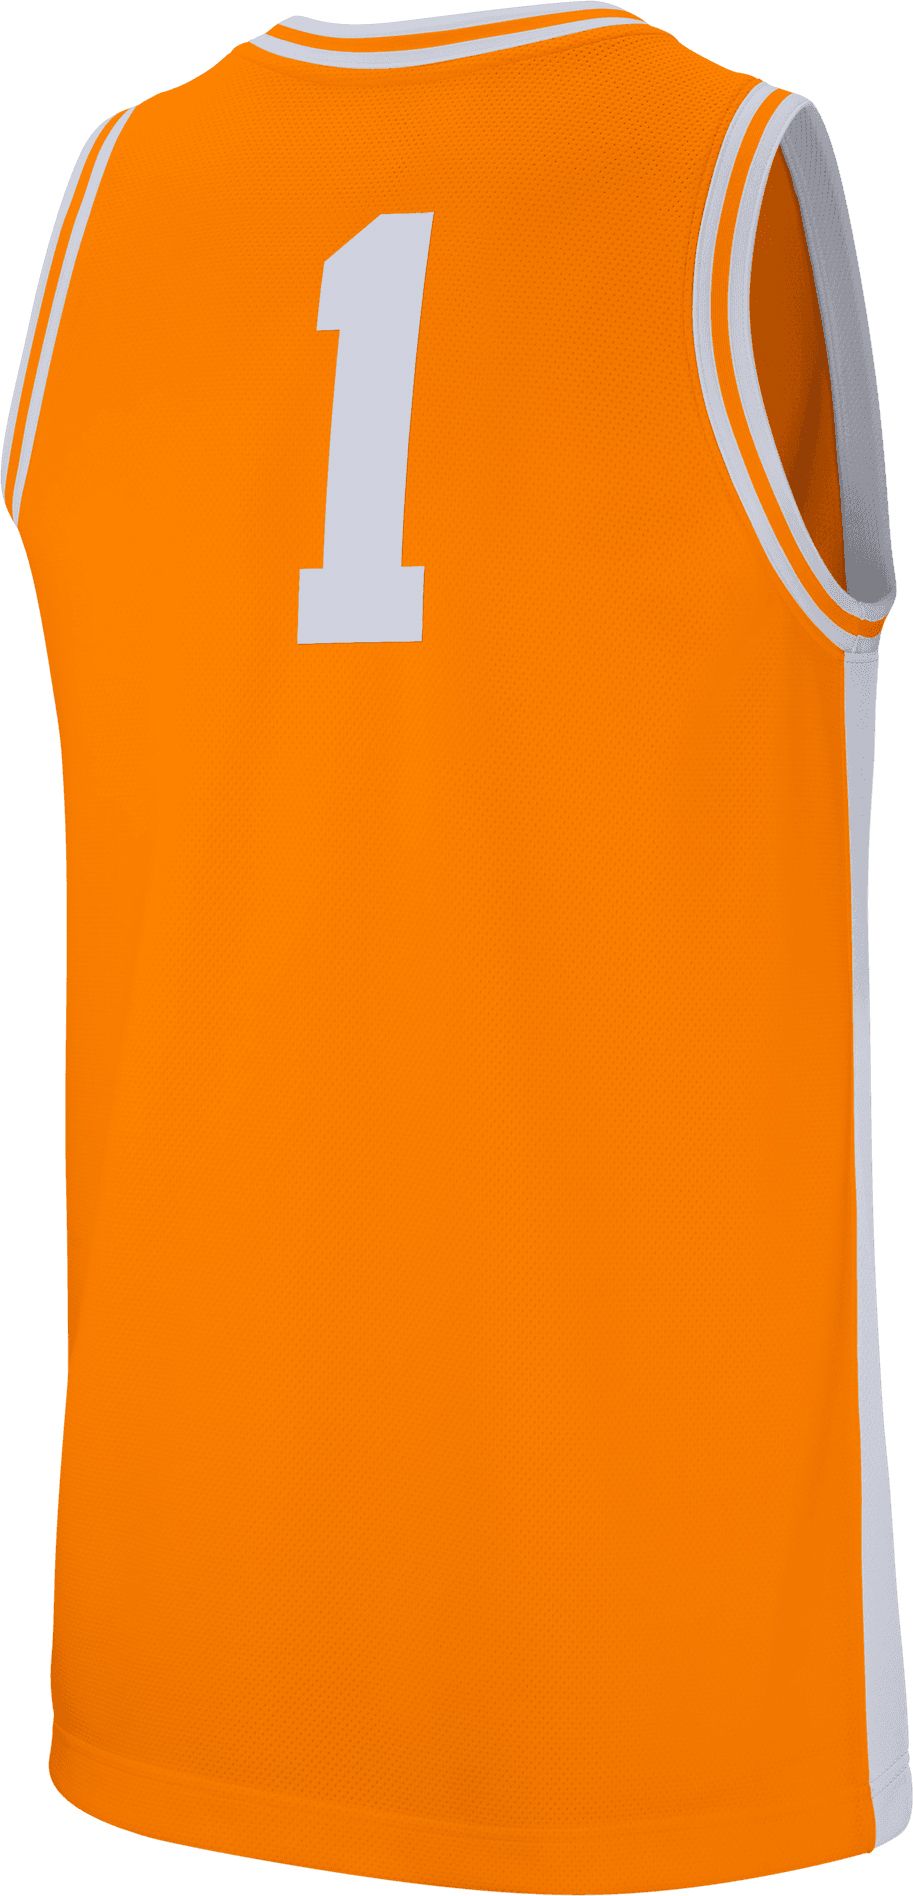 Orange basketball jersey